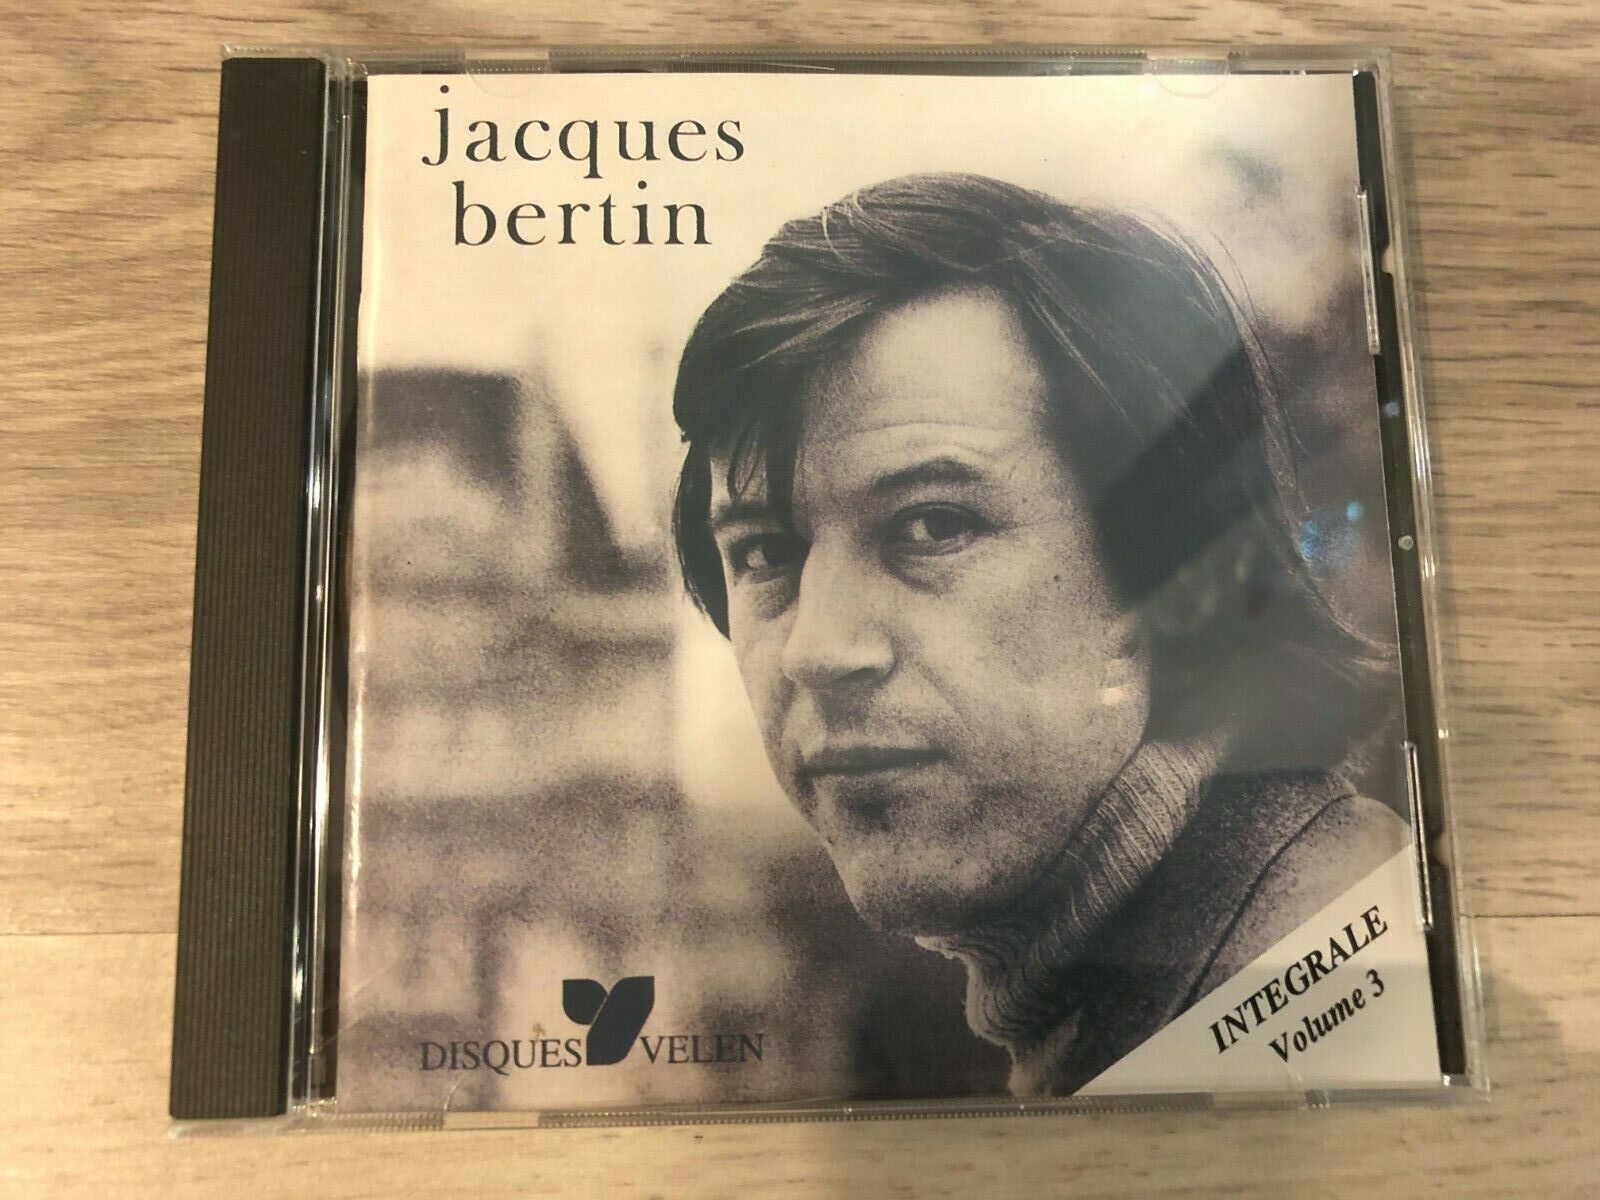 CD AUDIO JACQUES BERTIN INTEGRALE VOLUME 3 Nowy wybuchowy zakup